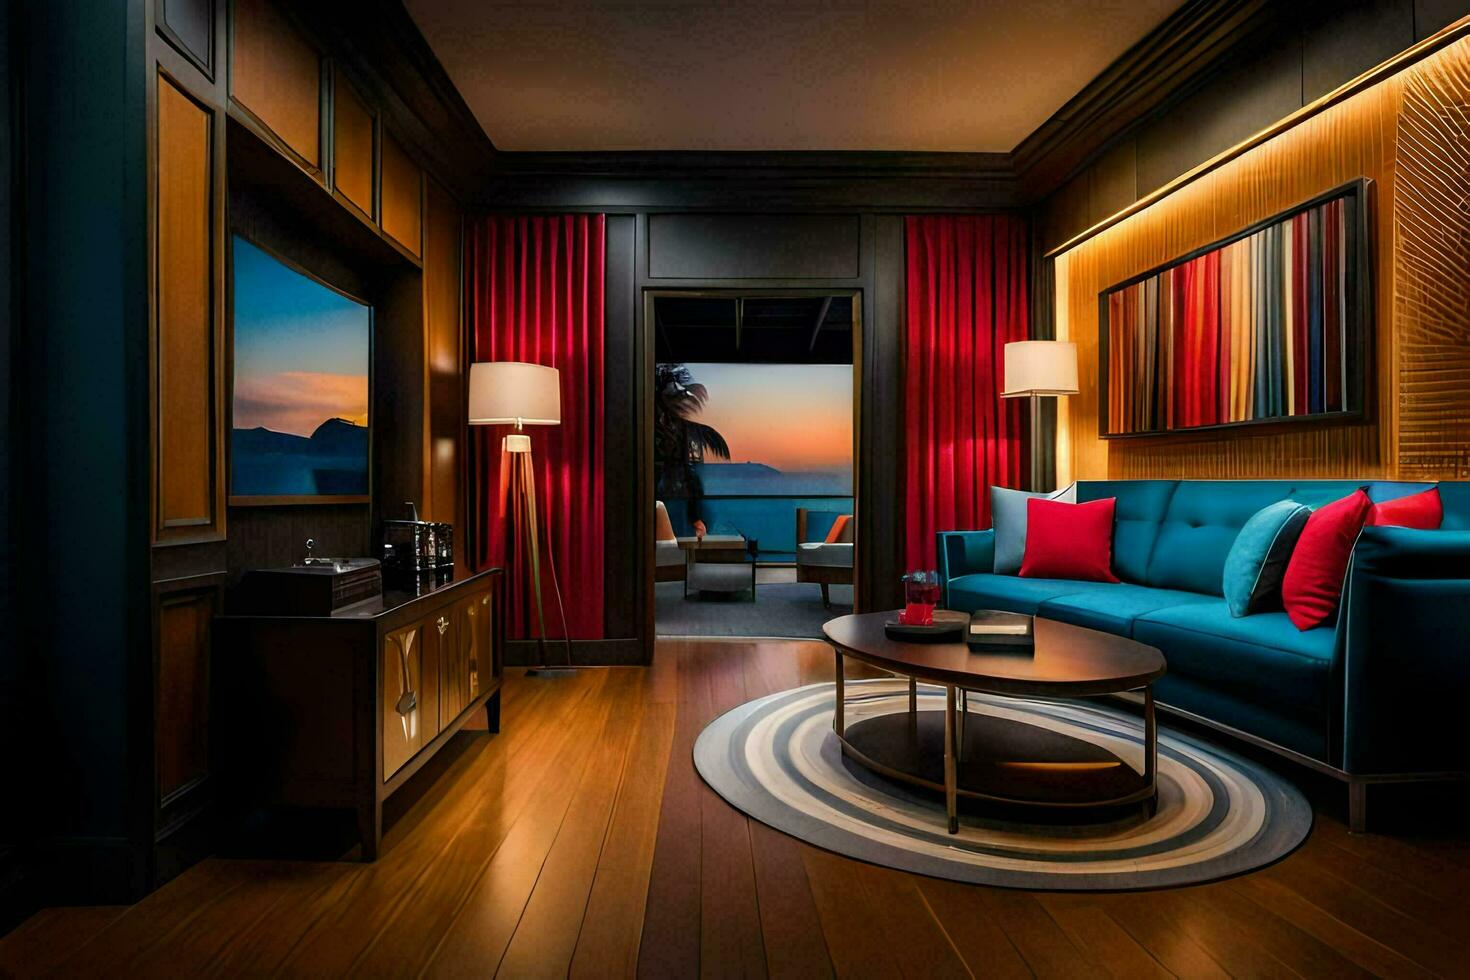 das Suite beim das Ritz Carlton, Phuket. KI-generiert foto